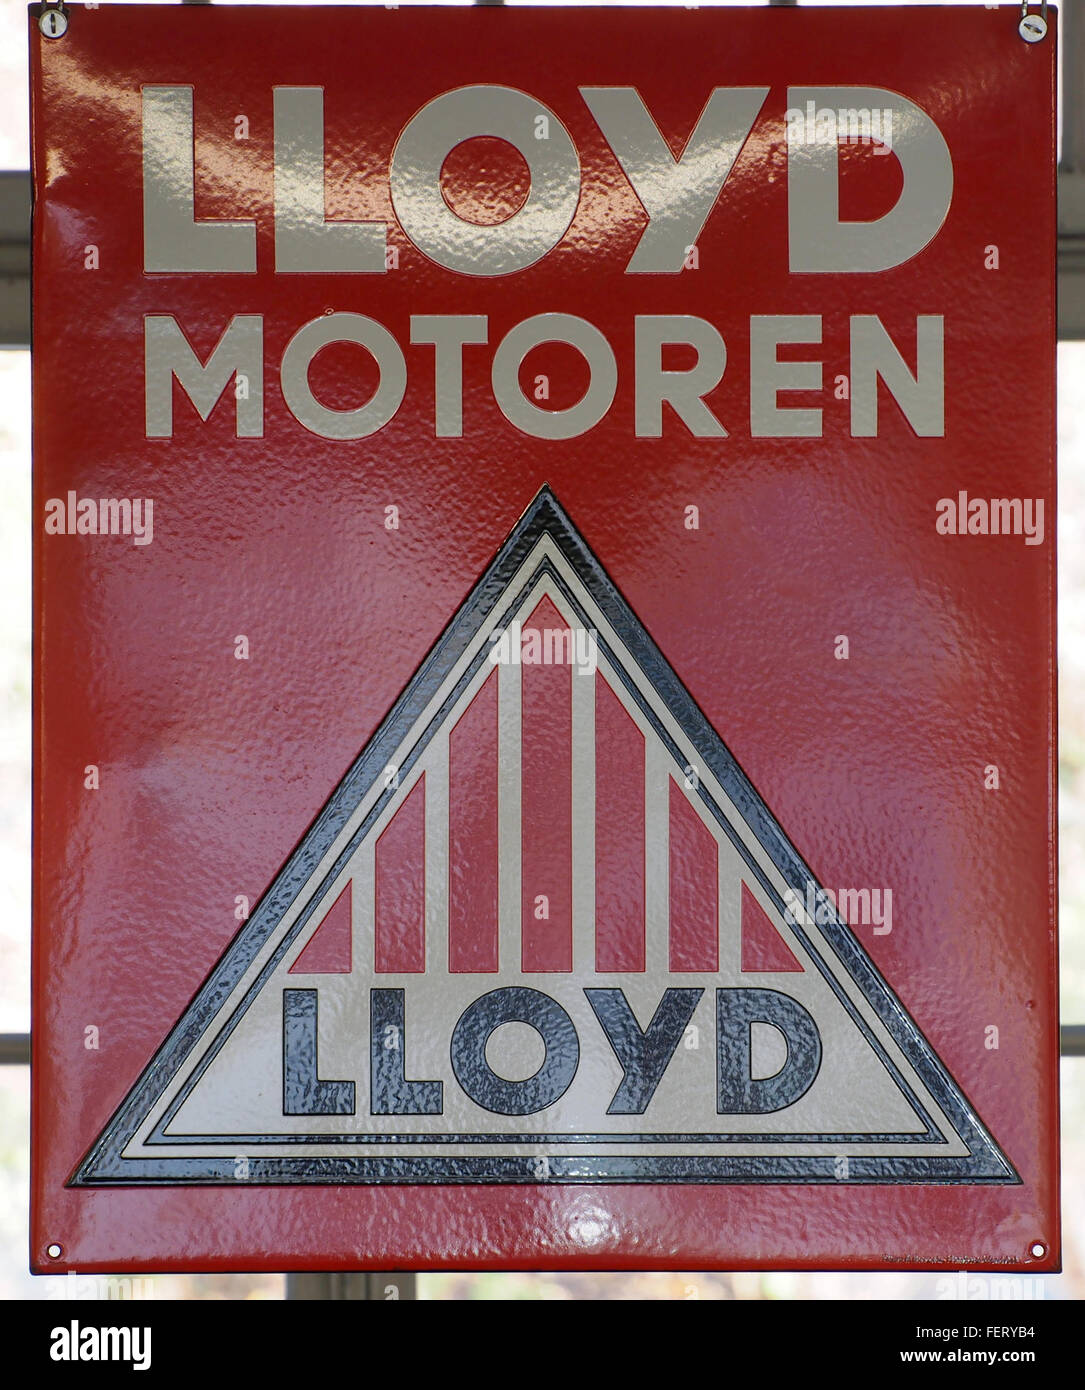 LLoyd Motoren emaille werbeschild Foto Stock